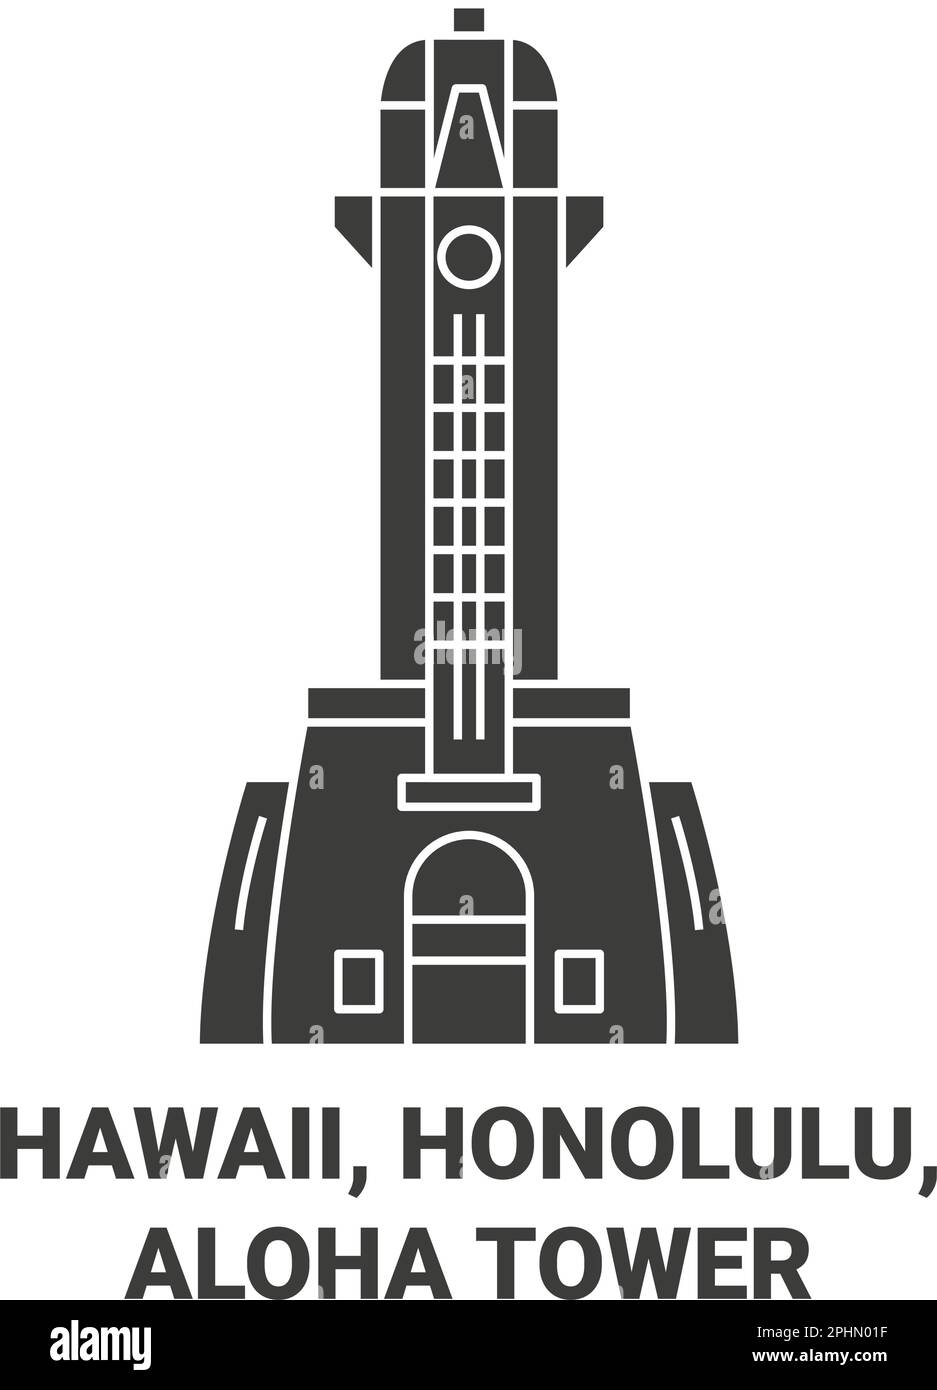 Vektorgrafik für Reisen in die USA, Hawaii, Honolulu, Aloha Tower Stock Vektor